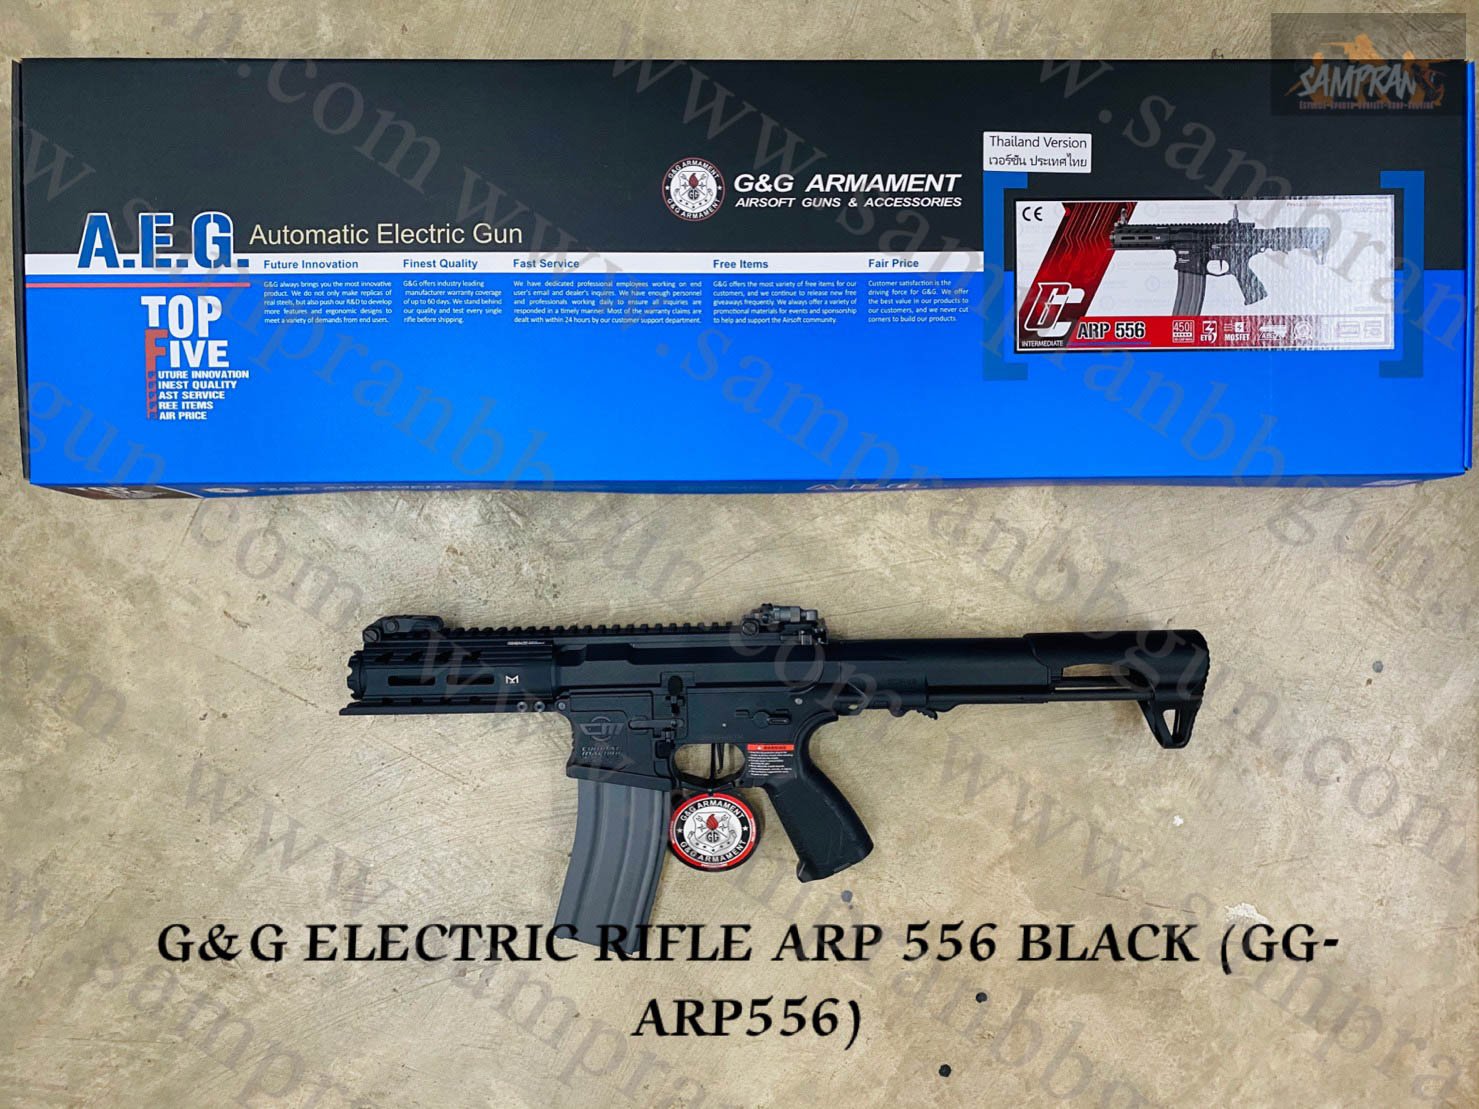 G&G ELECTRIC RIFLE ARP 556 BLACK (GG-ARP556)